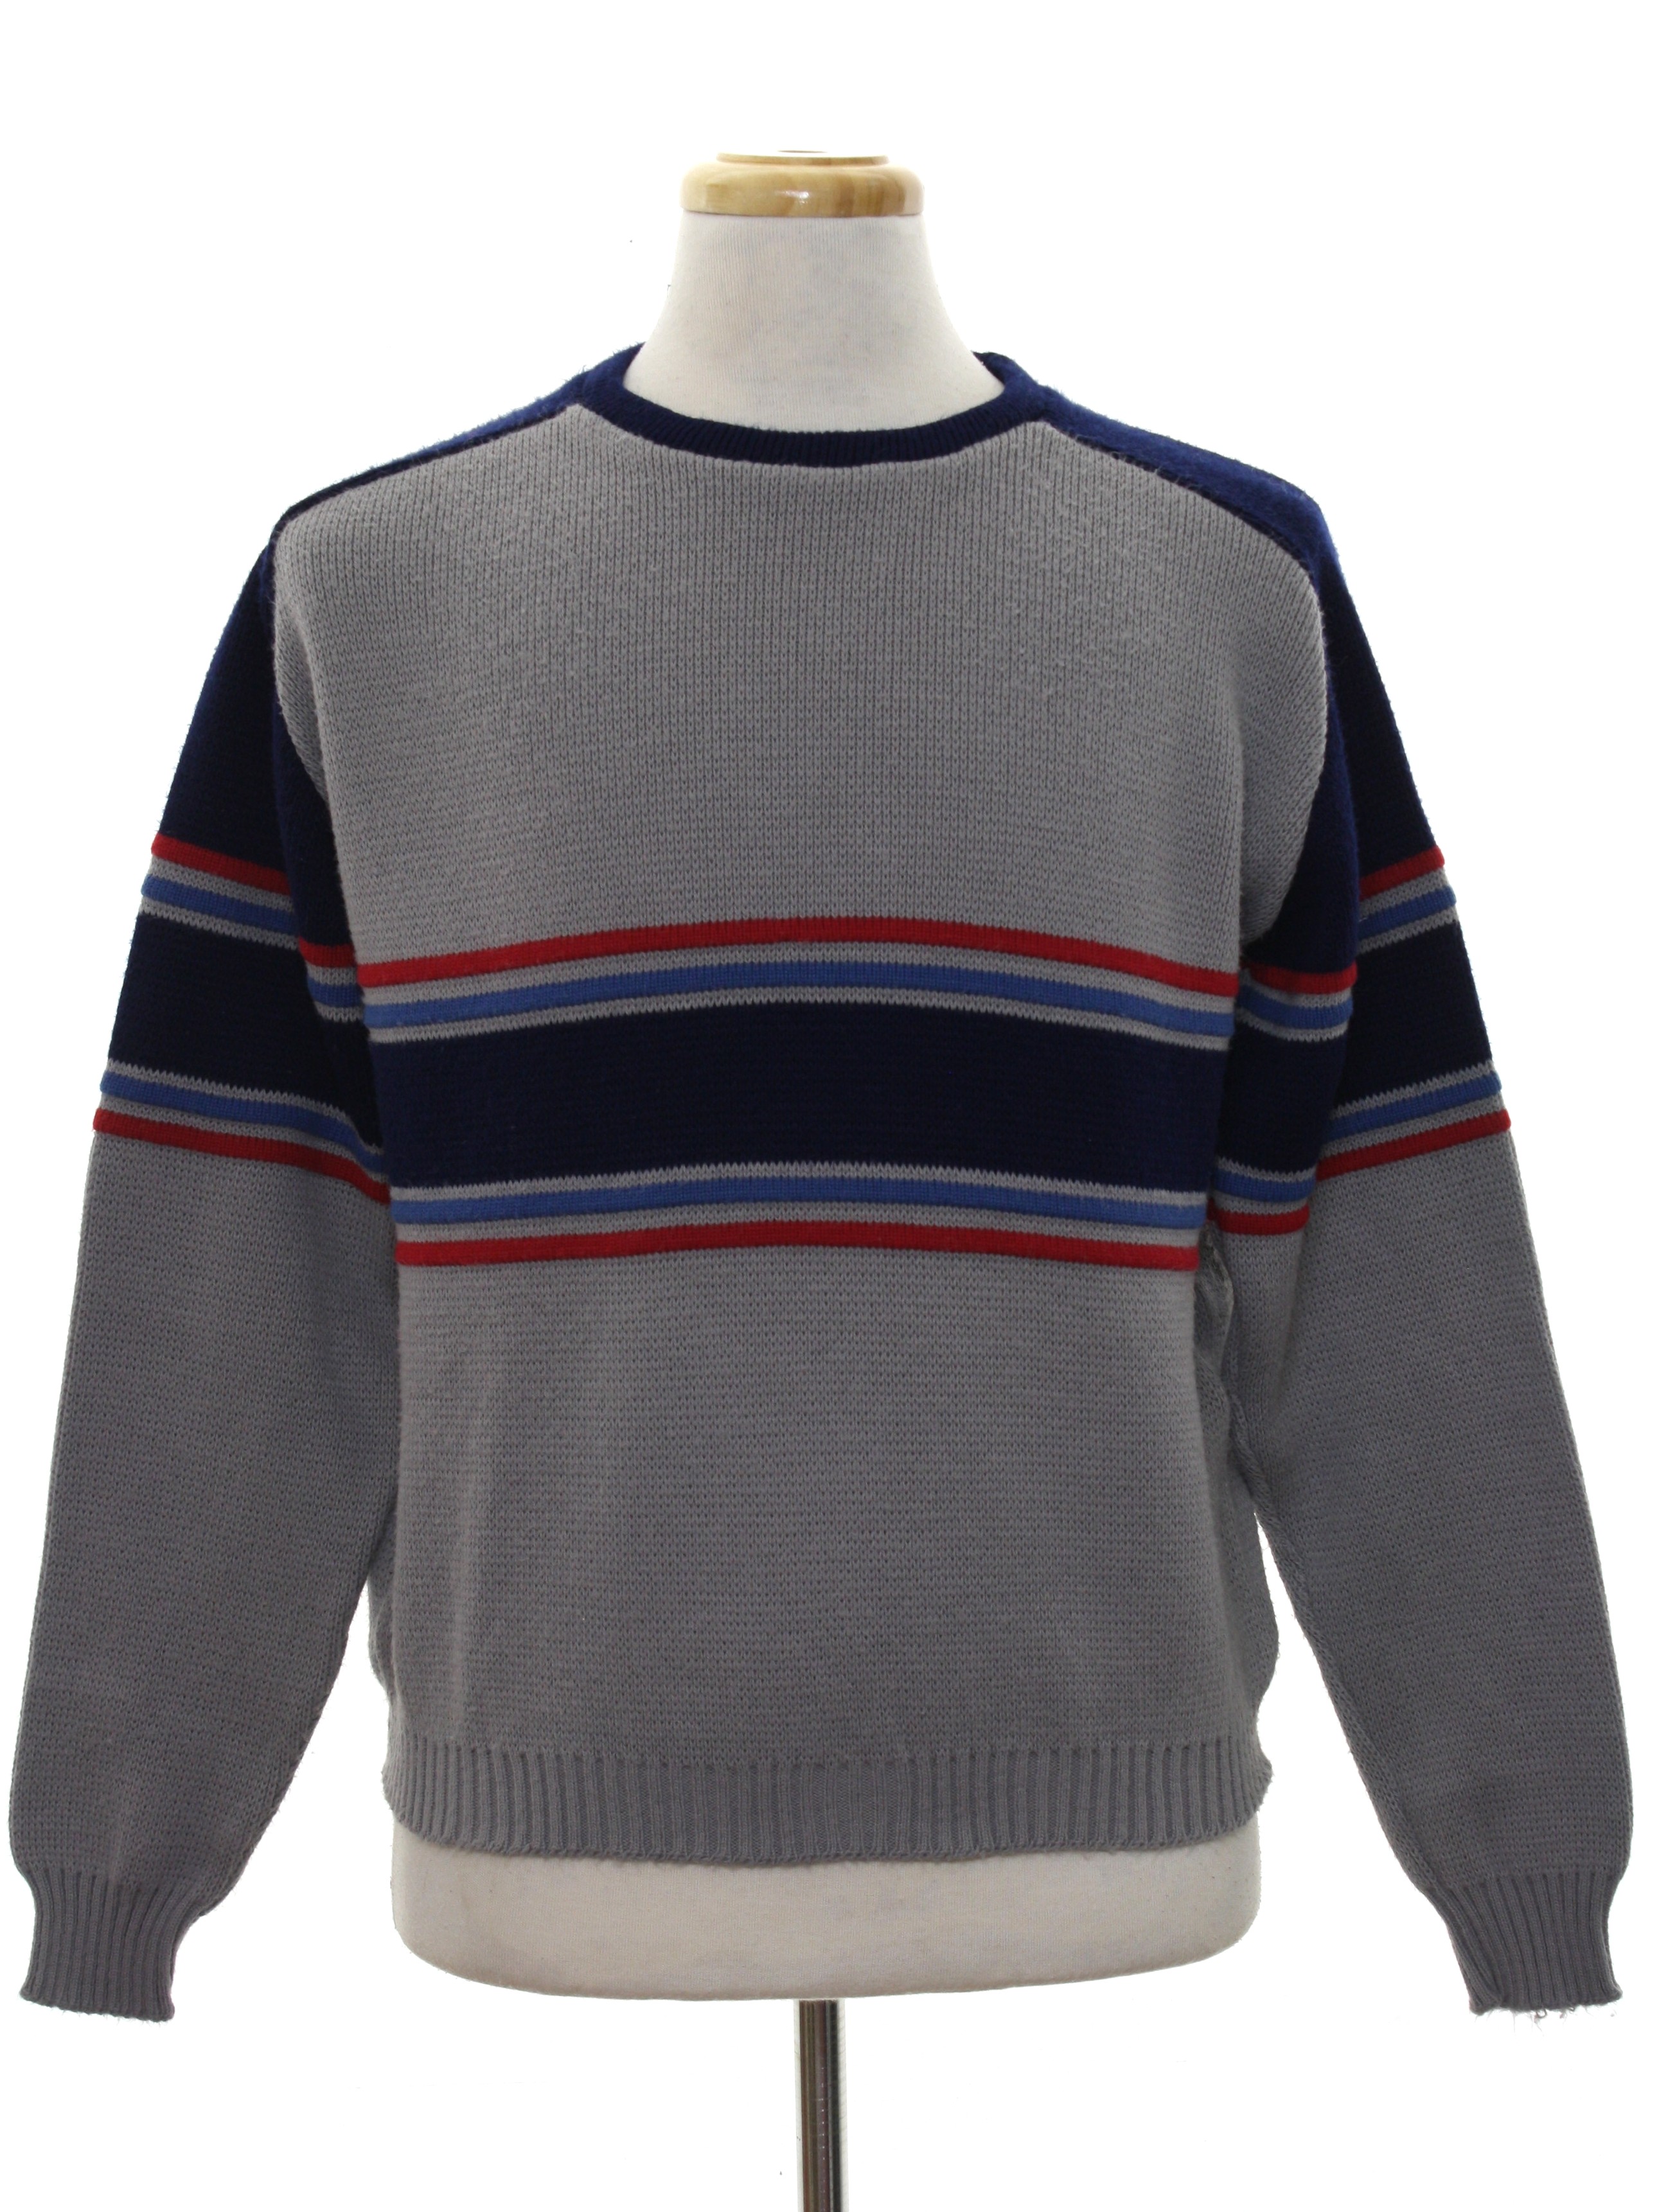 Retro 1980's Sweater (Montana Woolen Shop) : 80s -Montana Woolen Shop ...